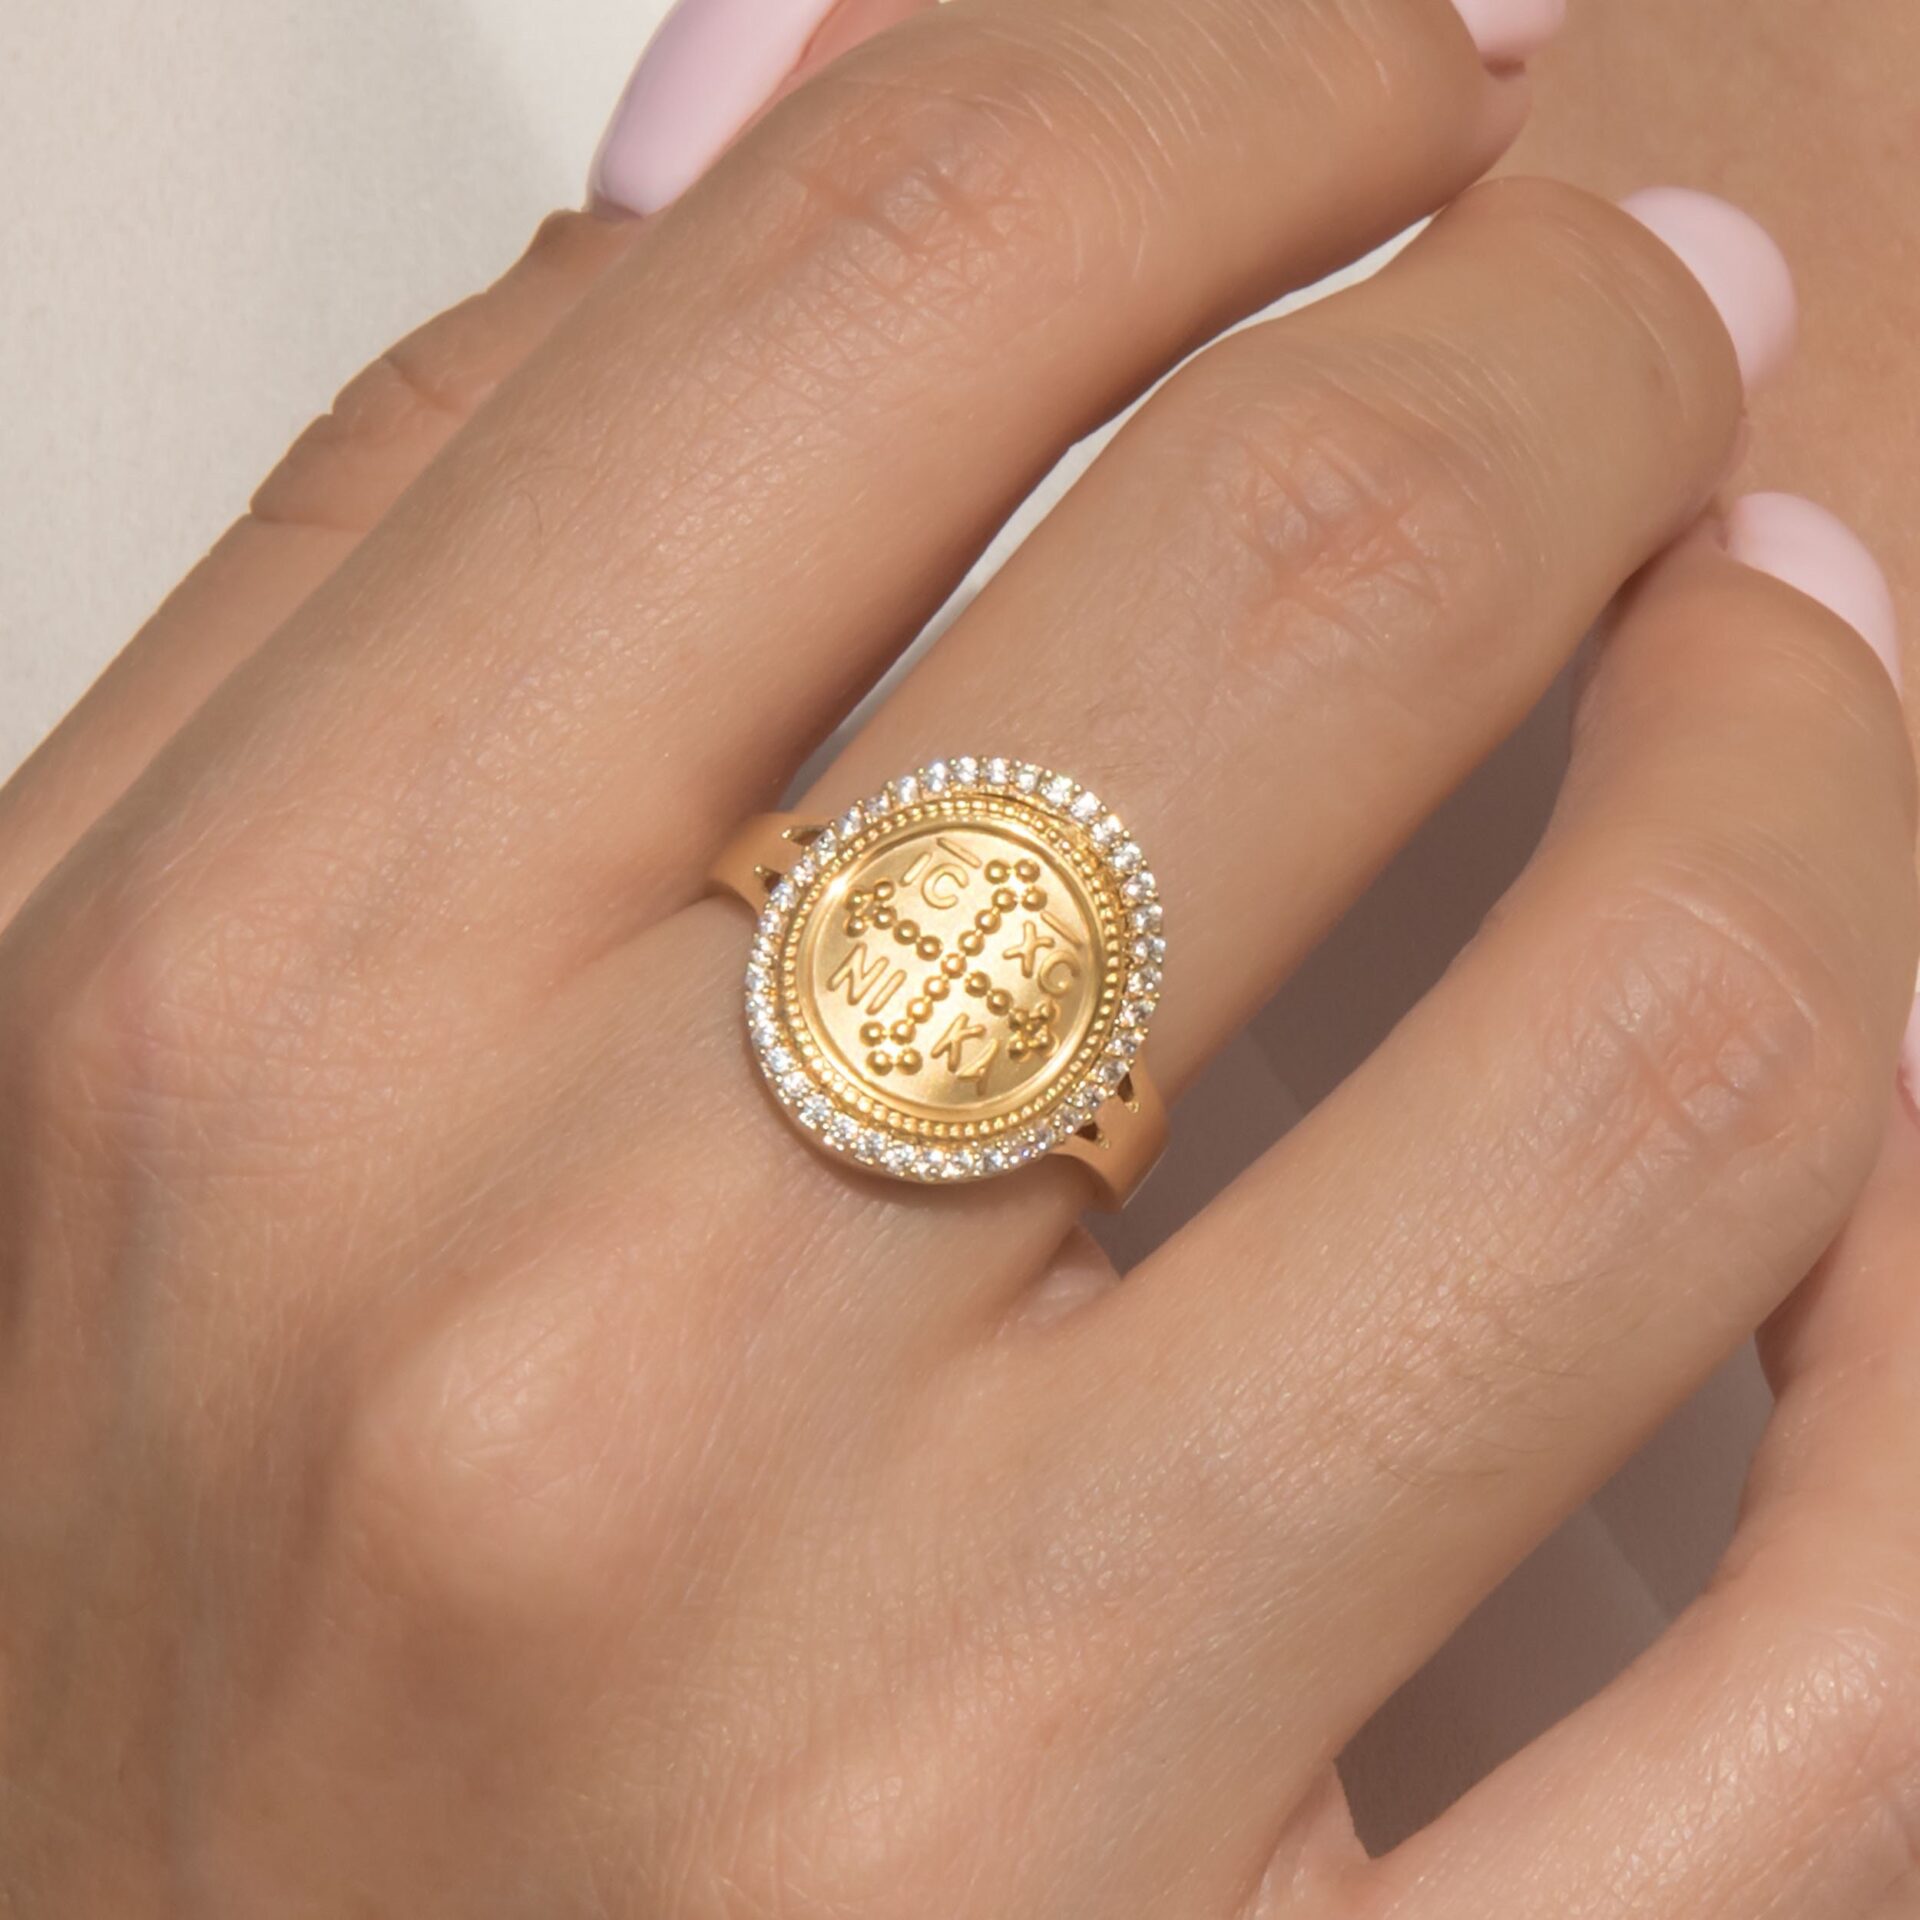 14k yellow gold diamond coin ring | eBay